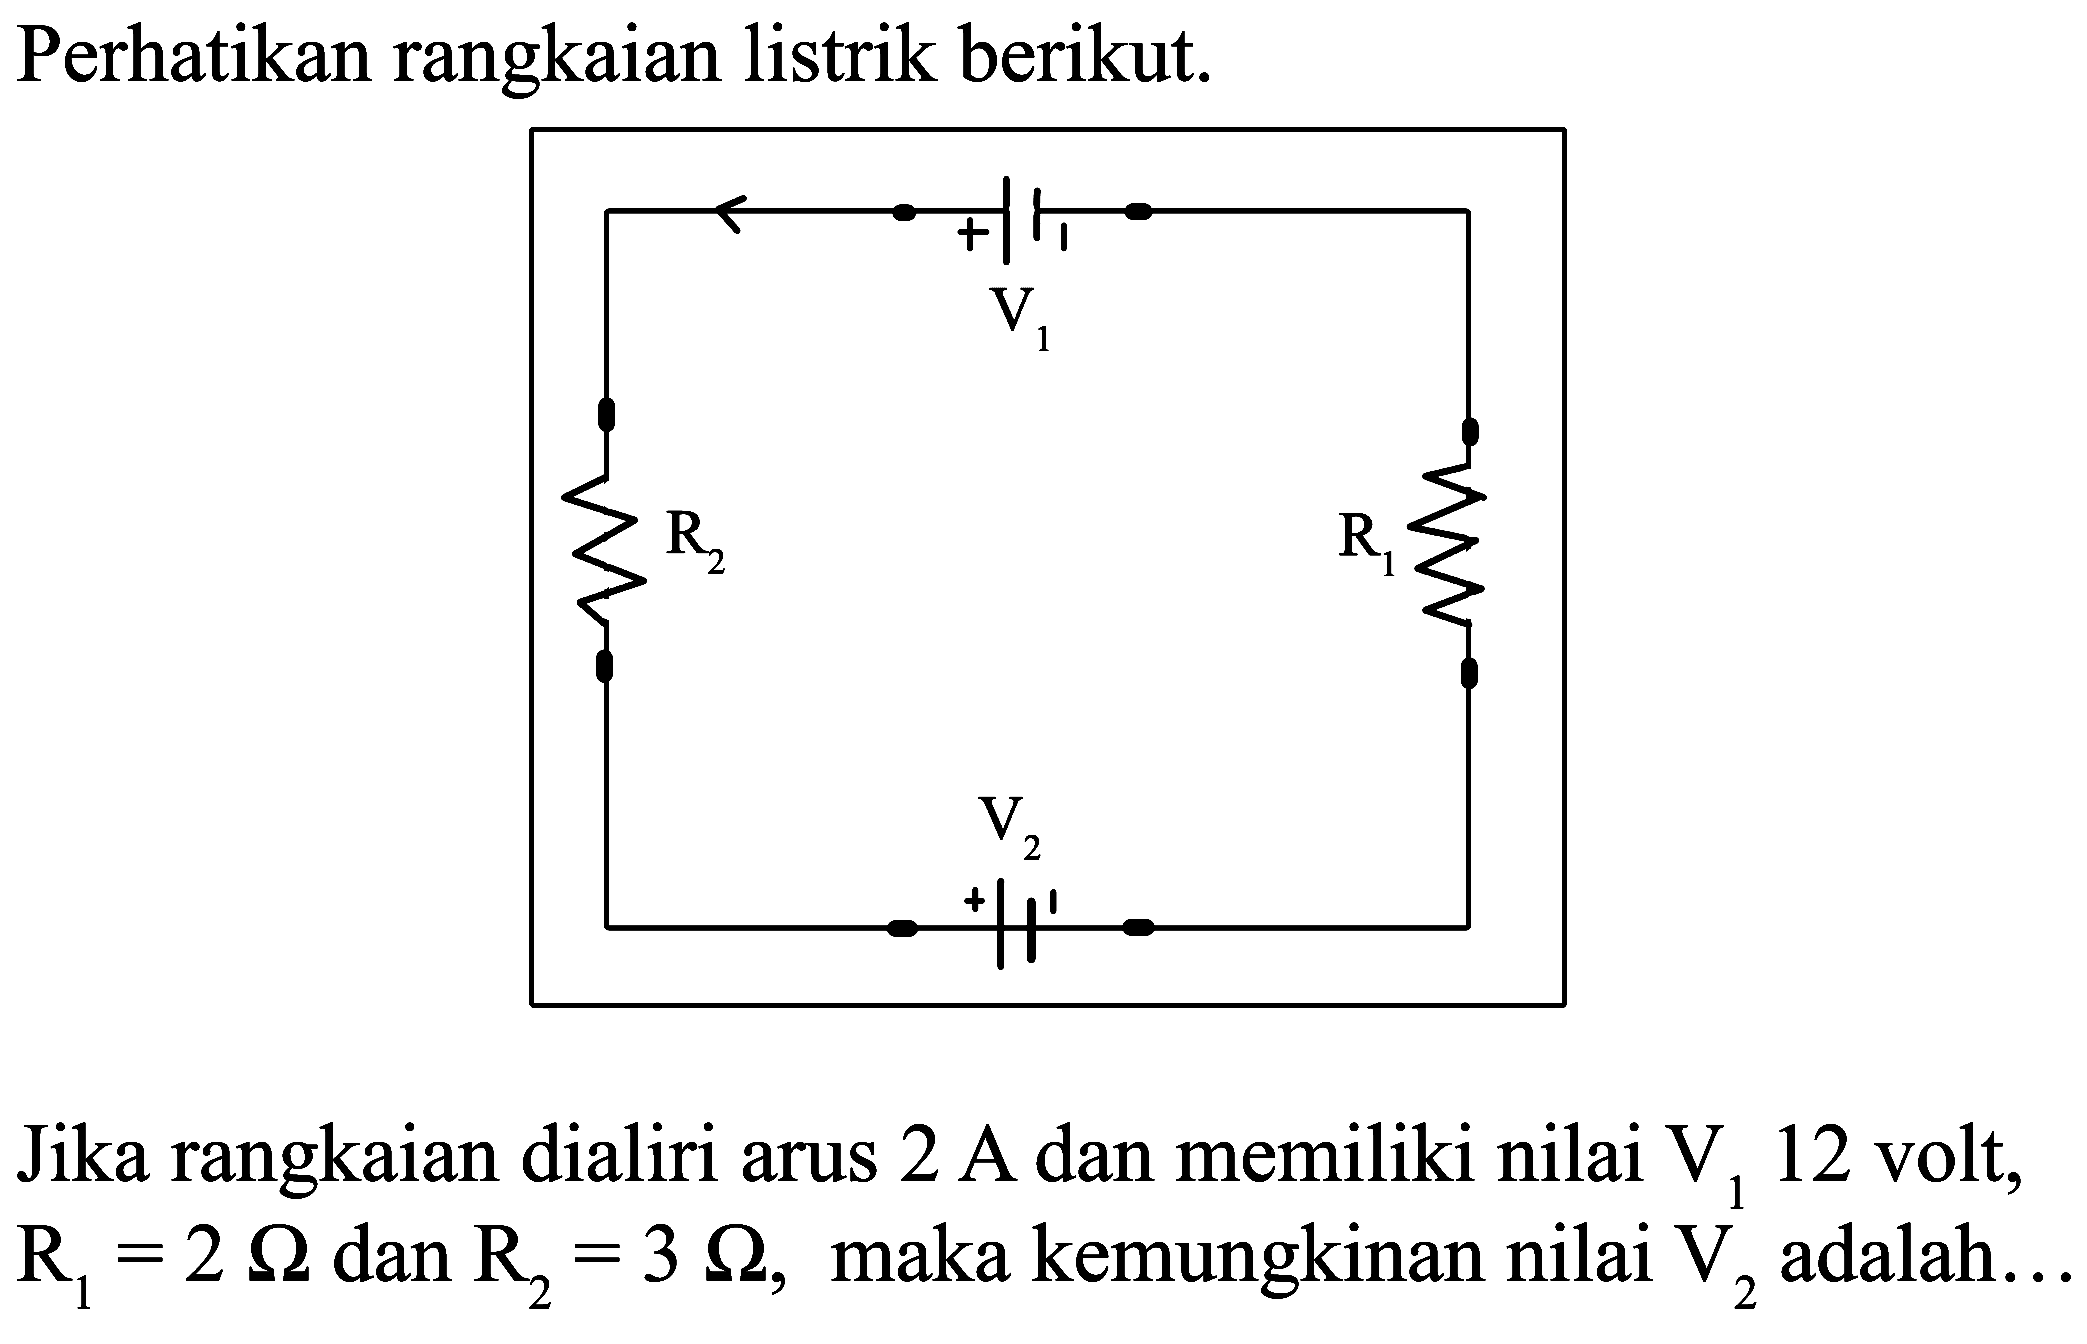 Perhatikan rangkaian listrik berikut.
Jika rangkaian dialiri arus  2 A  dan memiliki nilai  V_(1) 12  volt,  R_(1)=2 Ohm  dan  R_(2)=3 Ohm , maka kemungkinan nilai  V_(2)  adalah...